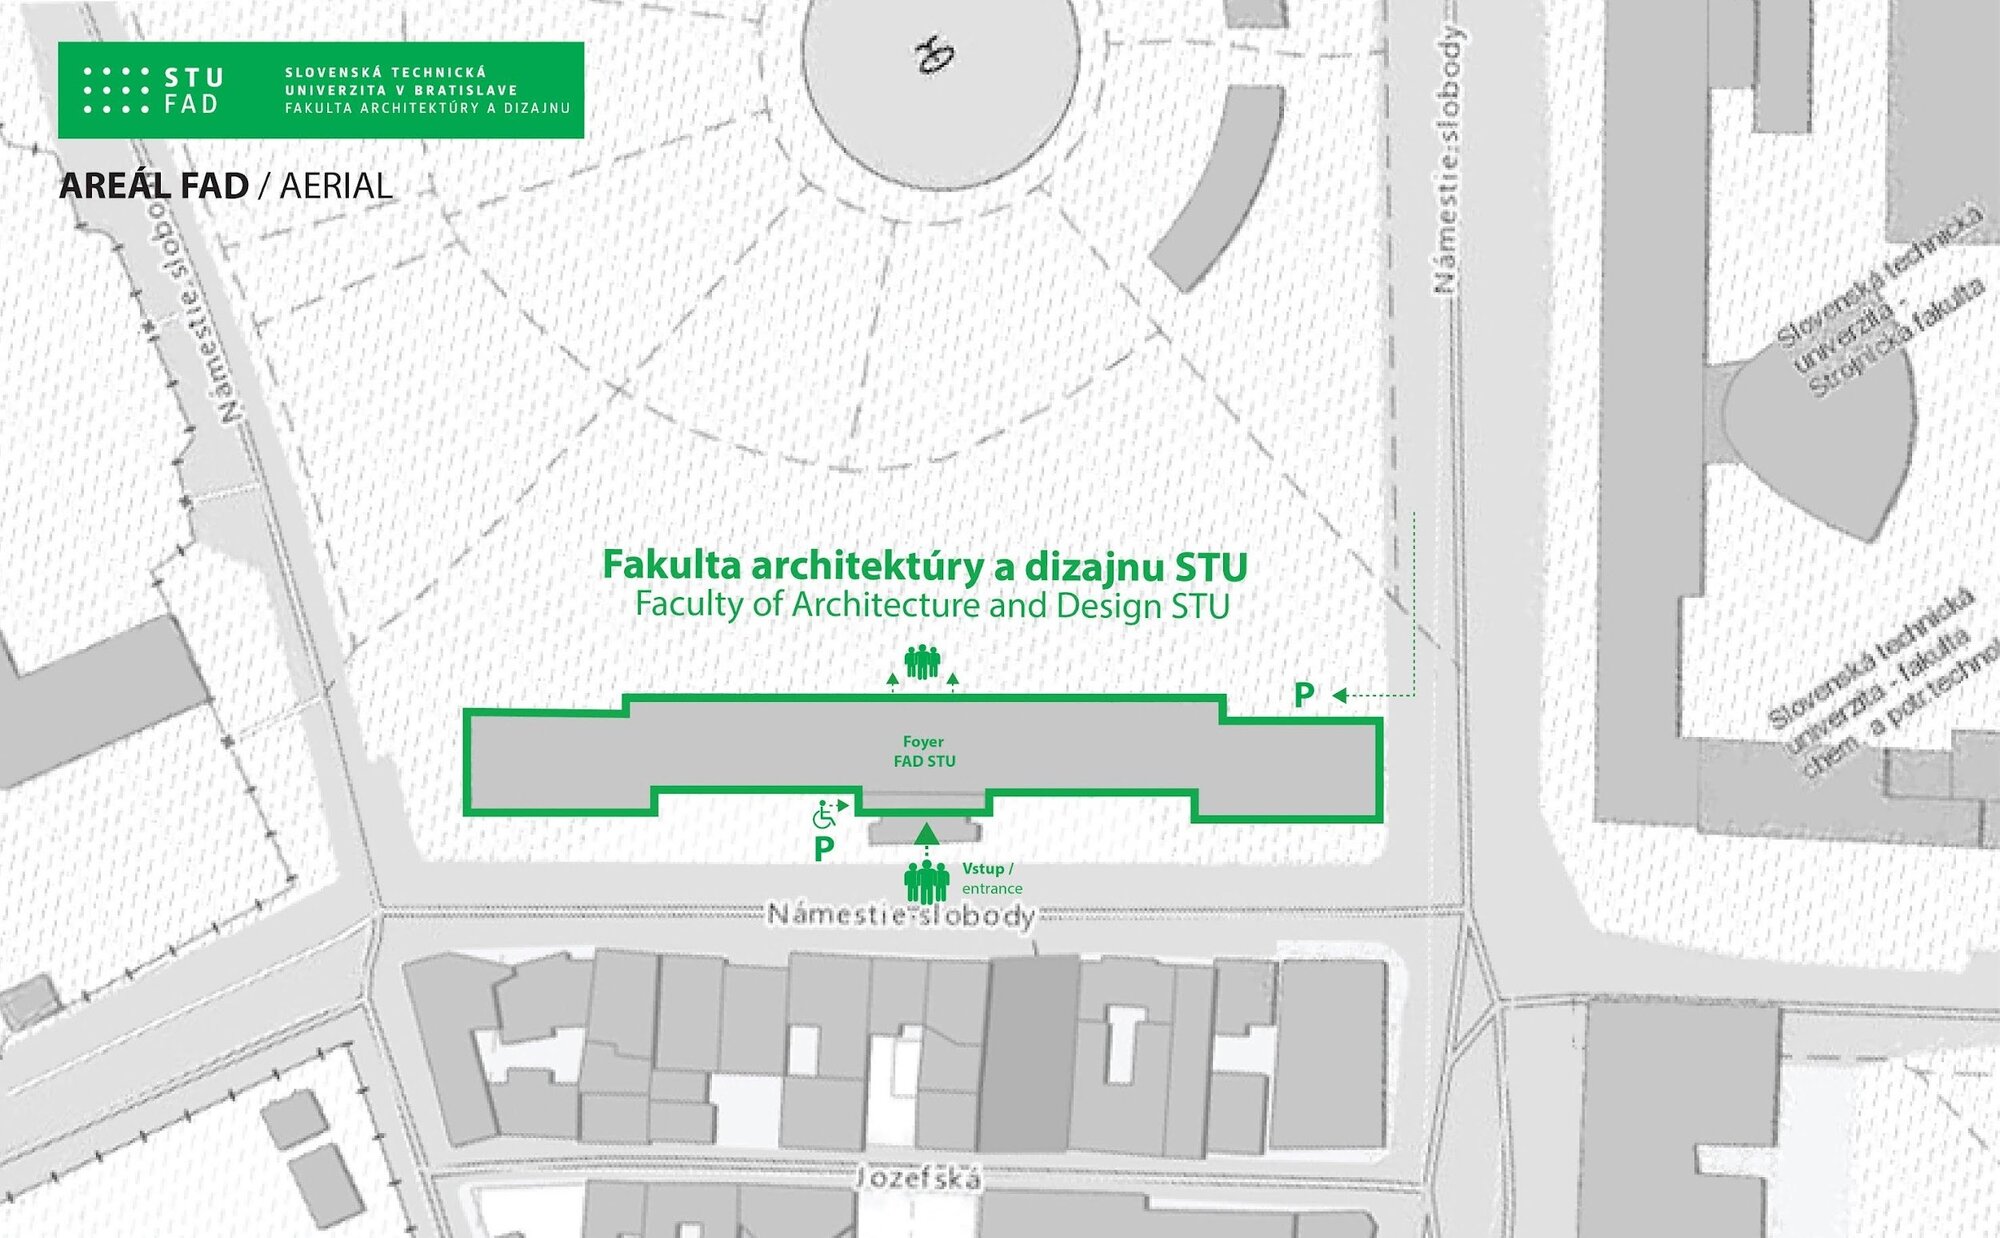 Situačná schéma budovy Fakulty architektúry a dizajnu STU v Bratislave